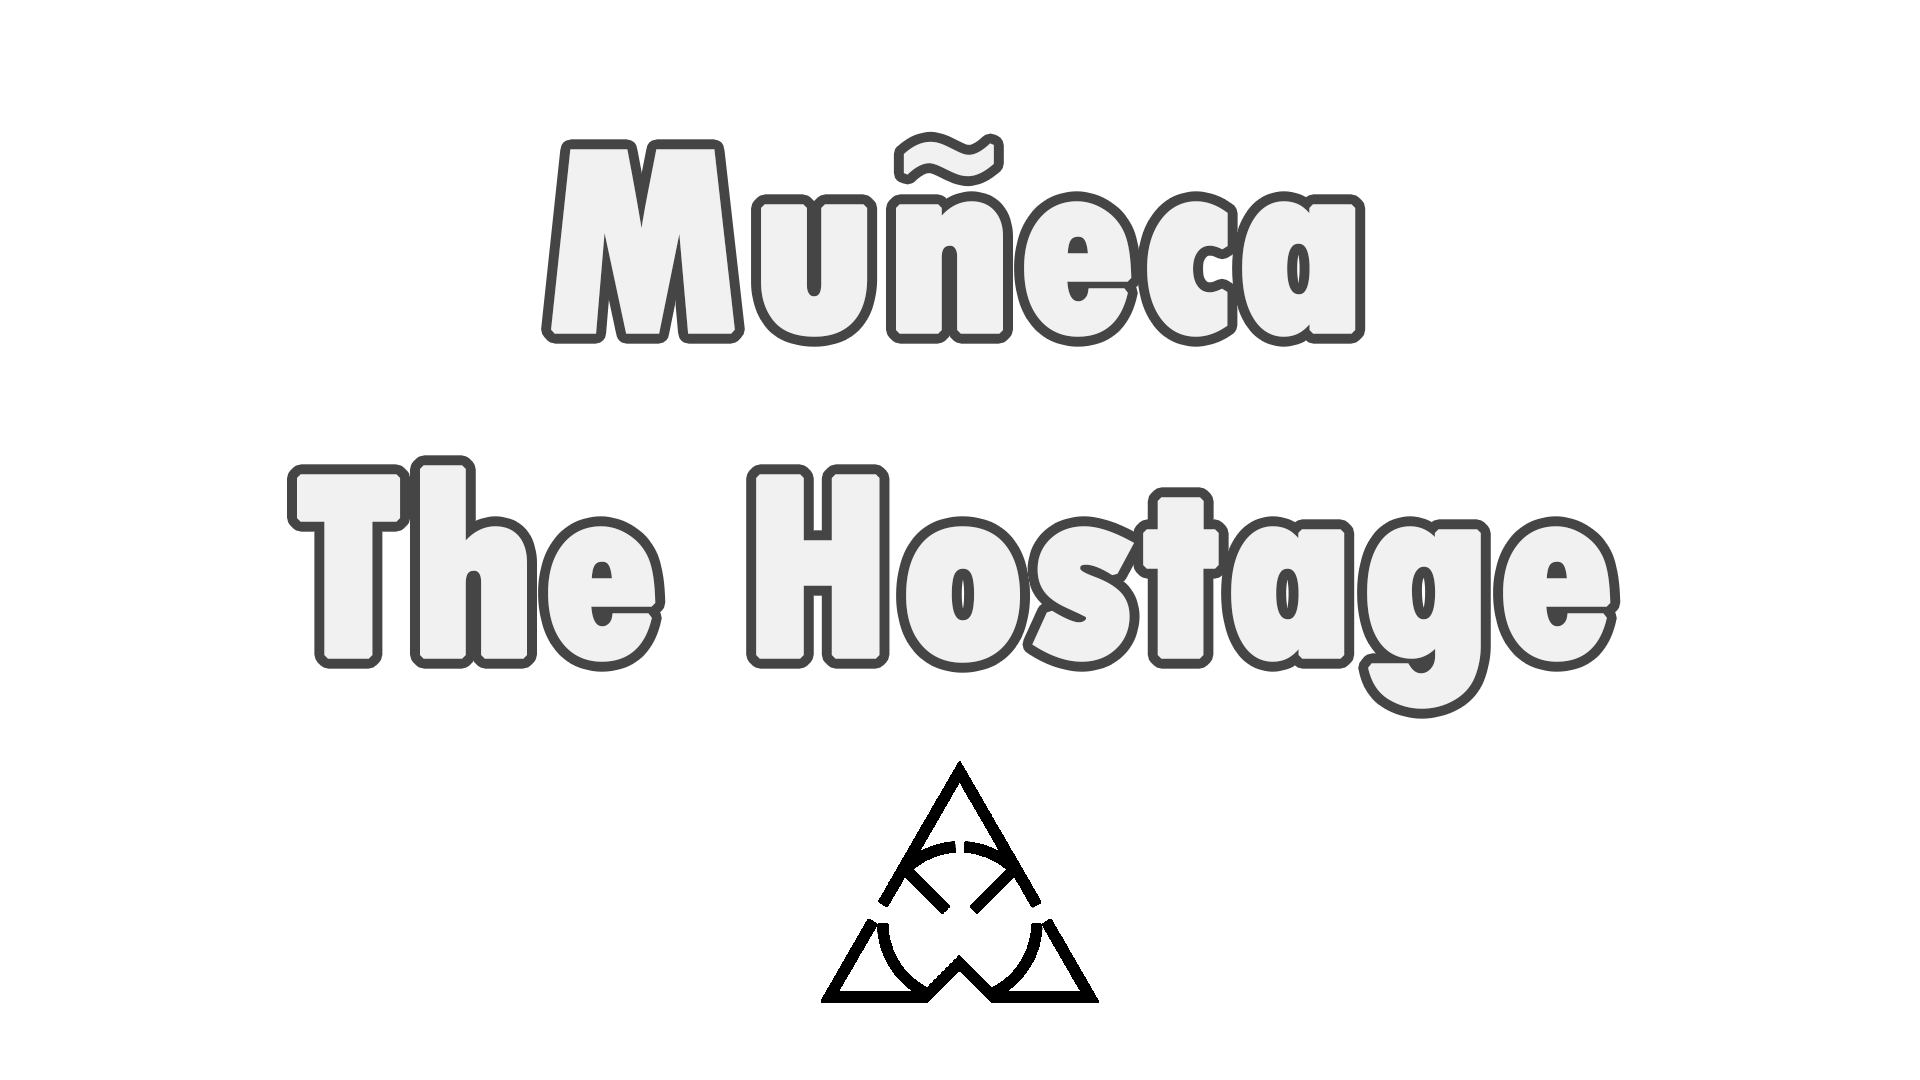 5d4d1c58 muneca the hostage ph title card